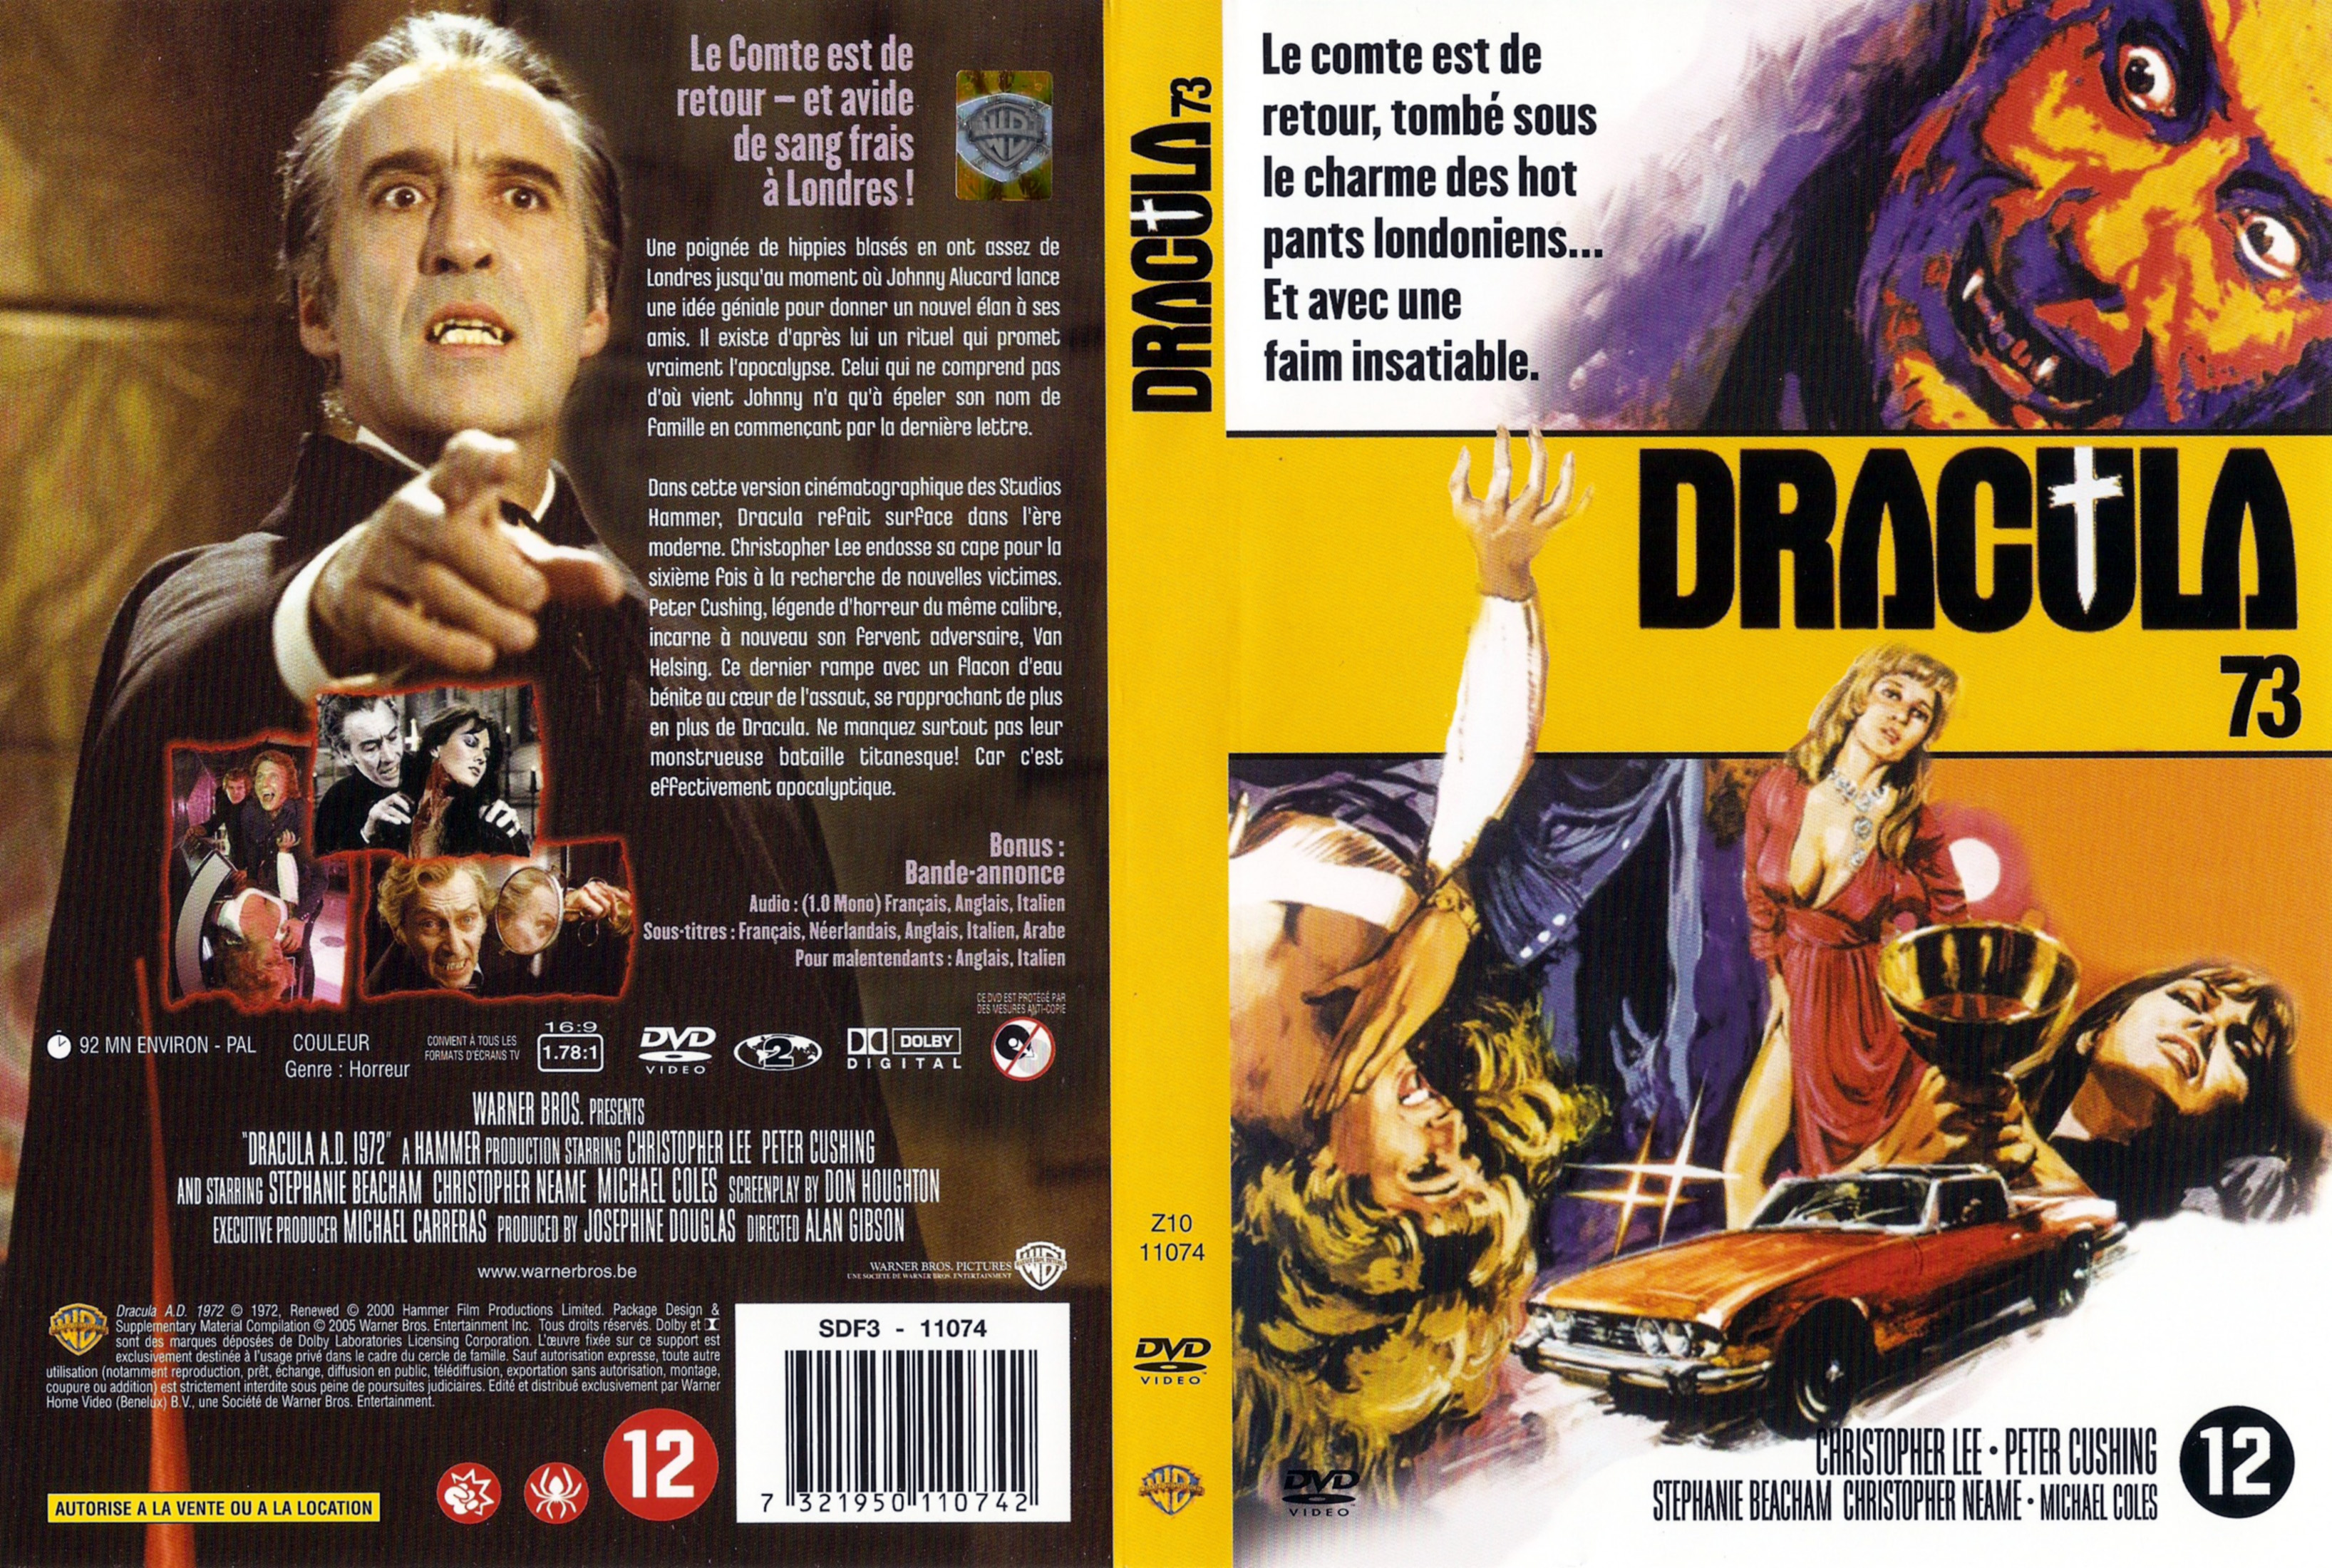 Jaquette DVD Dracula 73